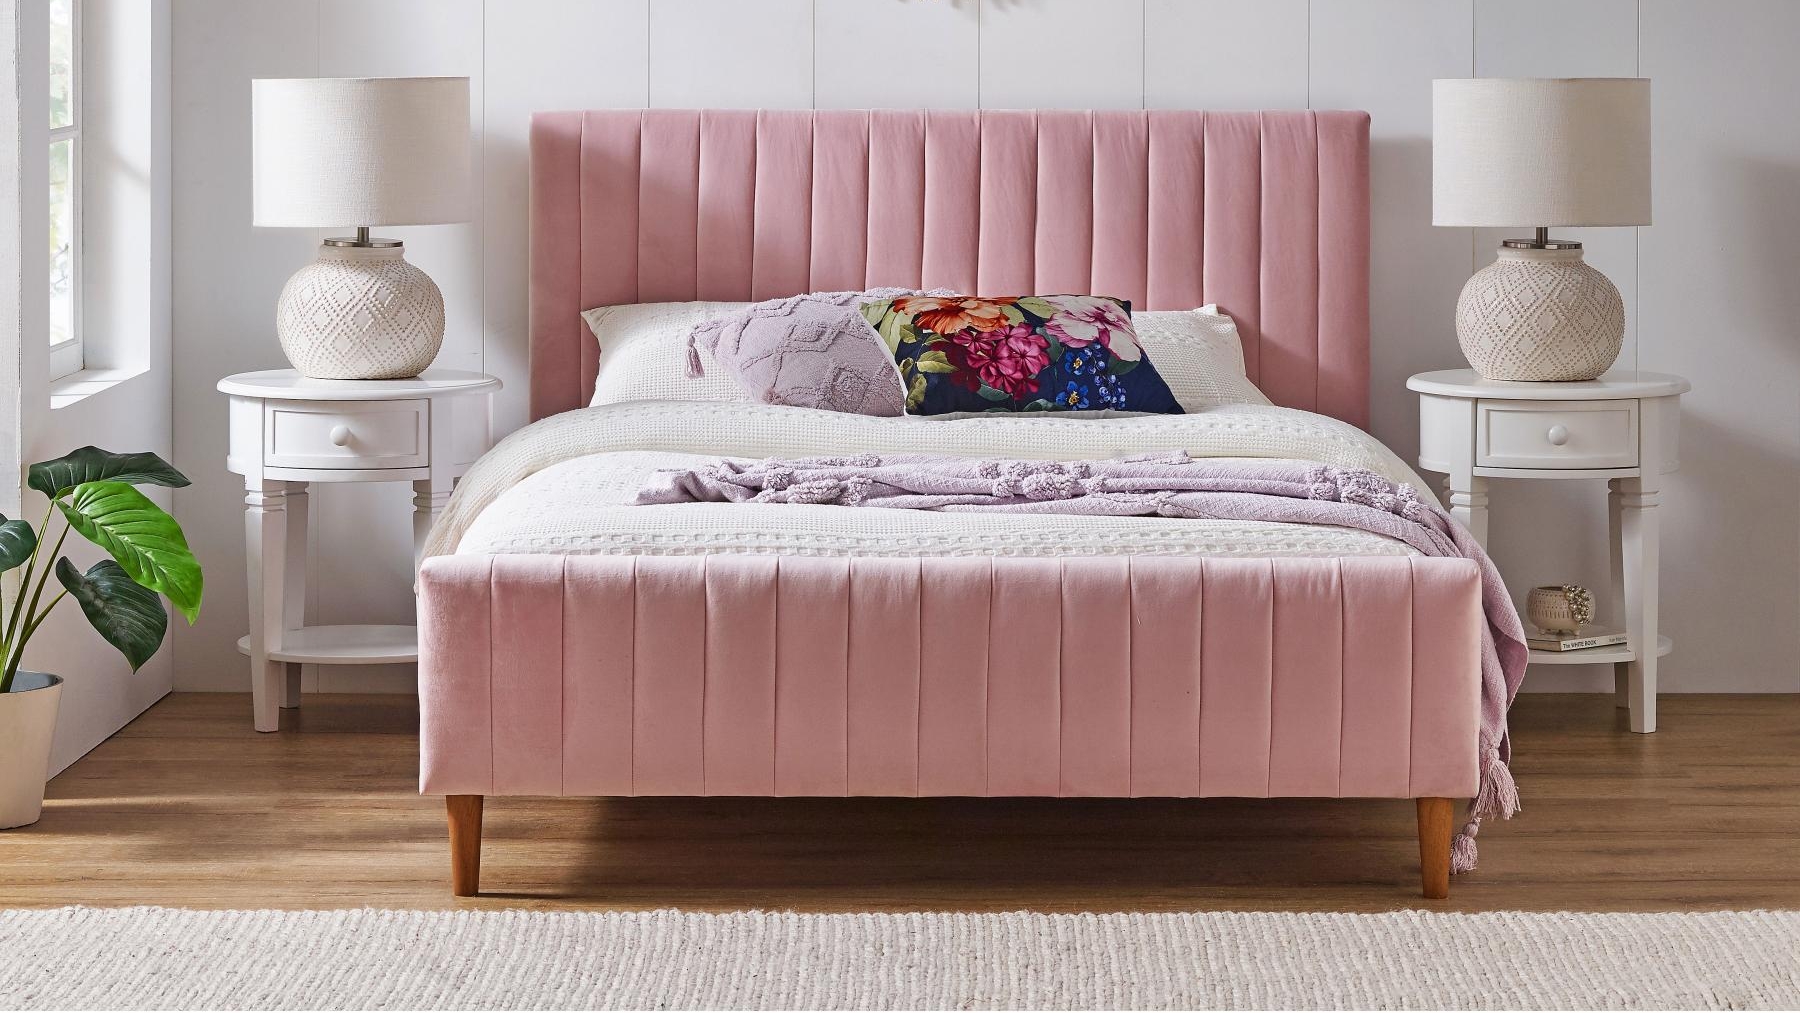 Pink Bed Frame Australia - Choose from big brands including luxo